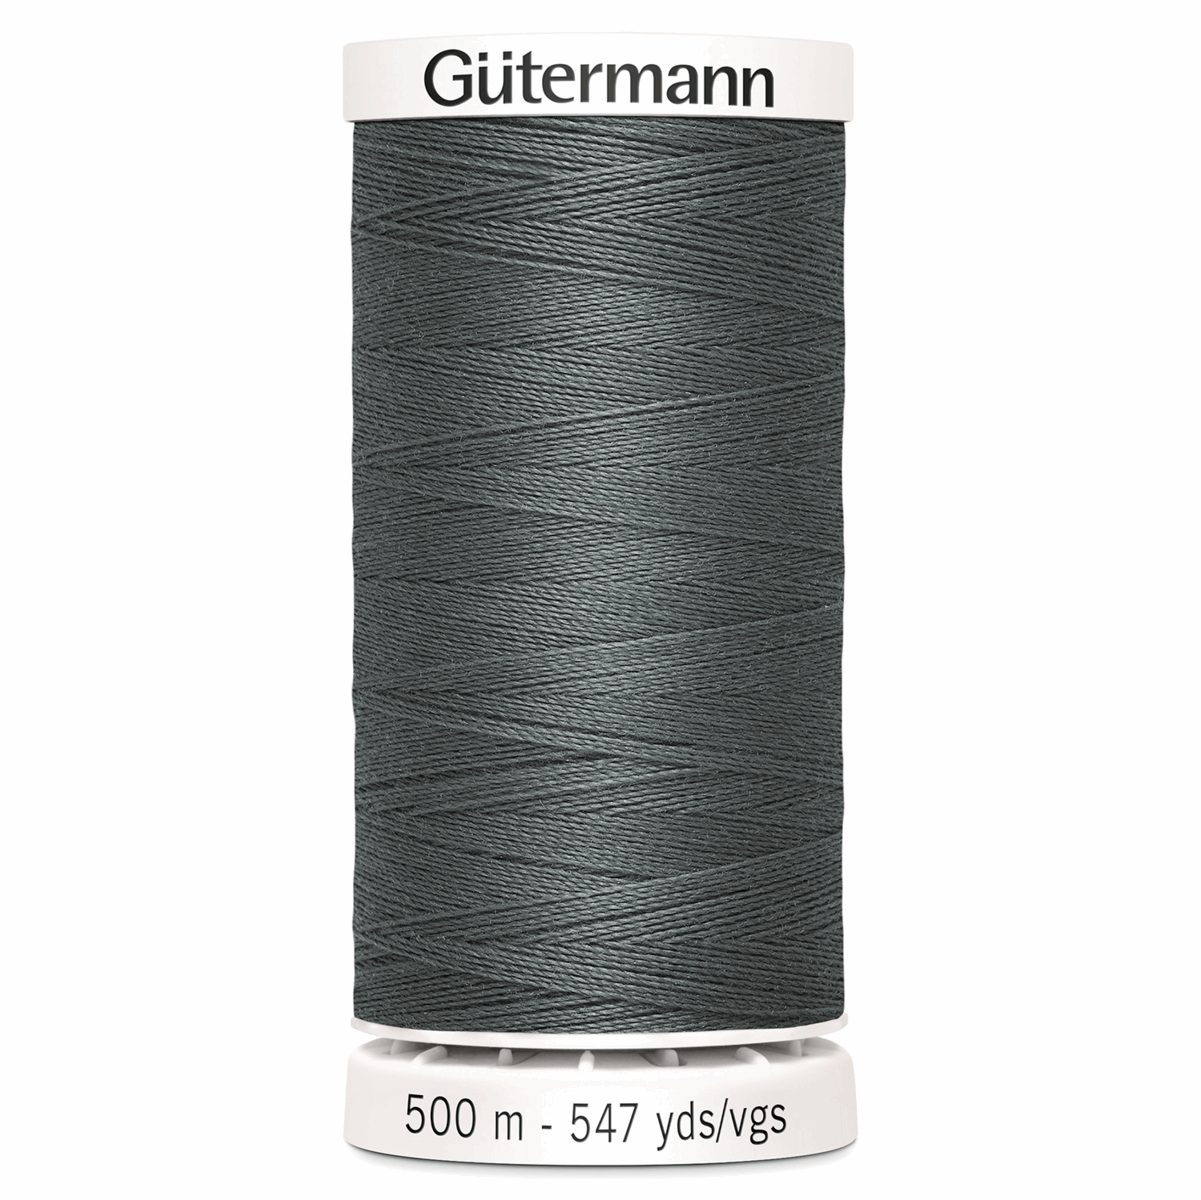 Gutermann Sew-All Thread 500m - Dovetail Grey (#701)